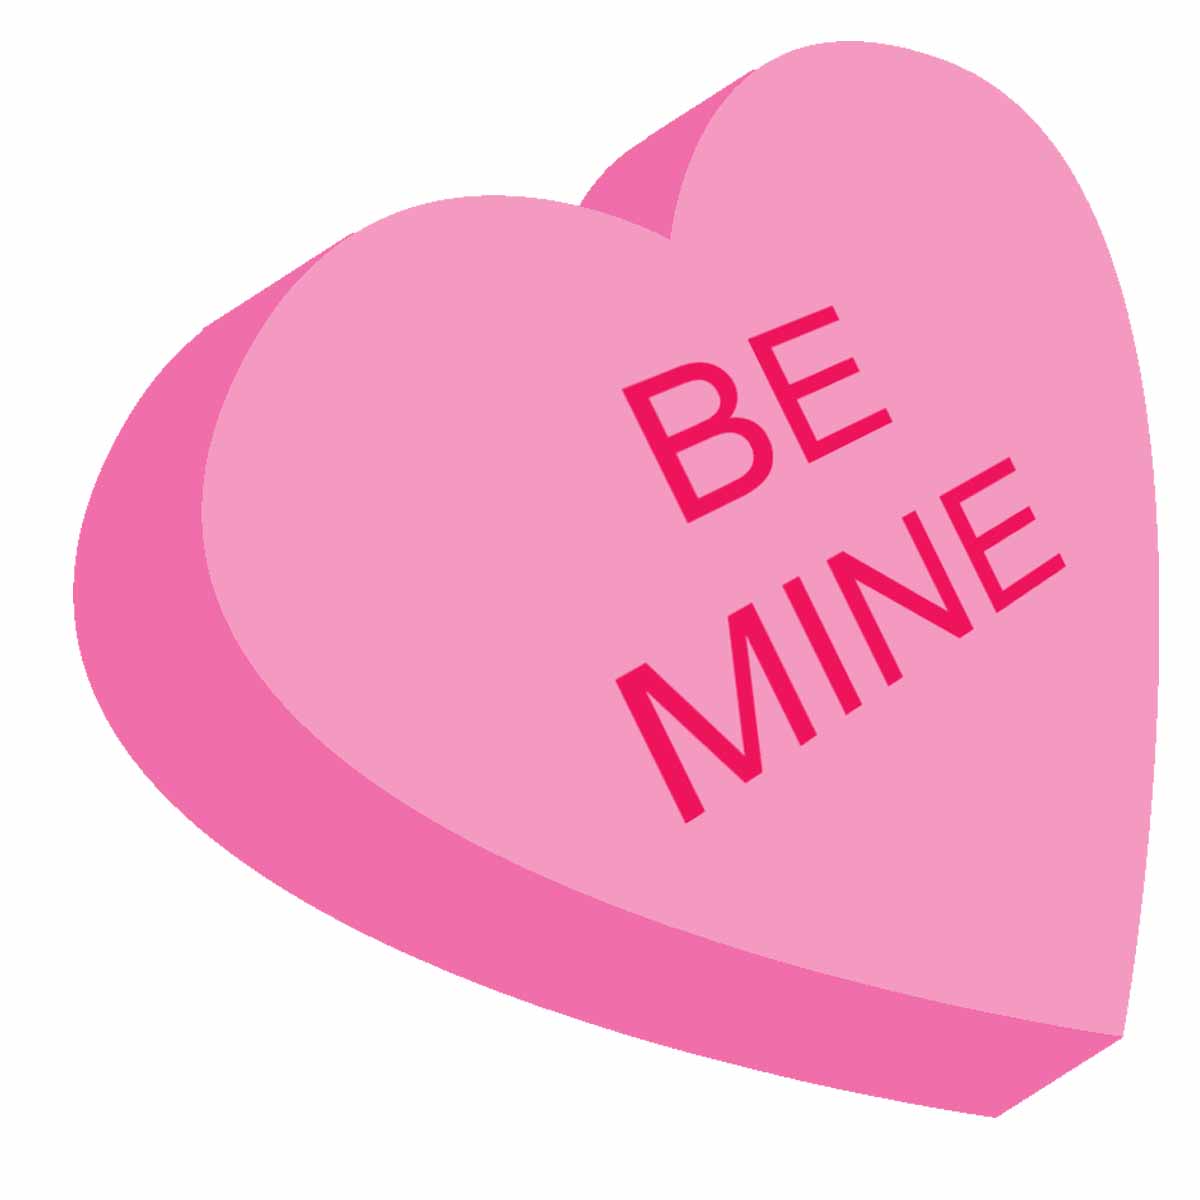 Romantic Valentine Candy Hear - Clip Art Valentines Day